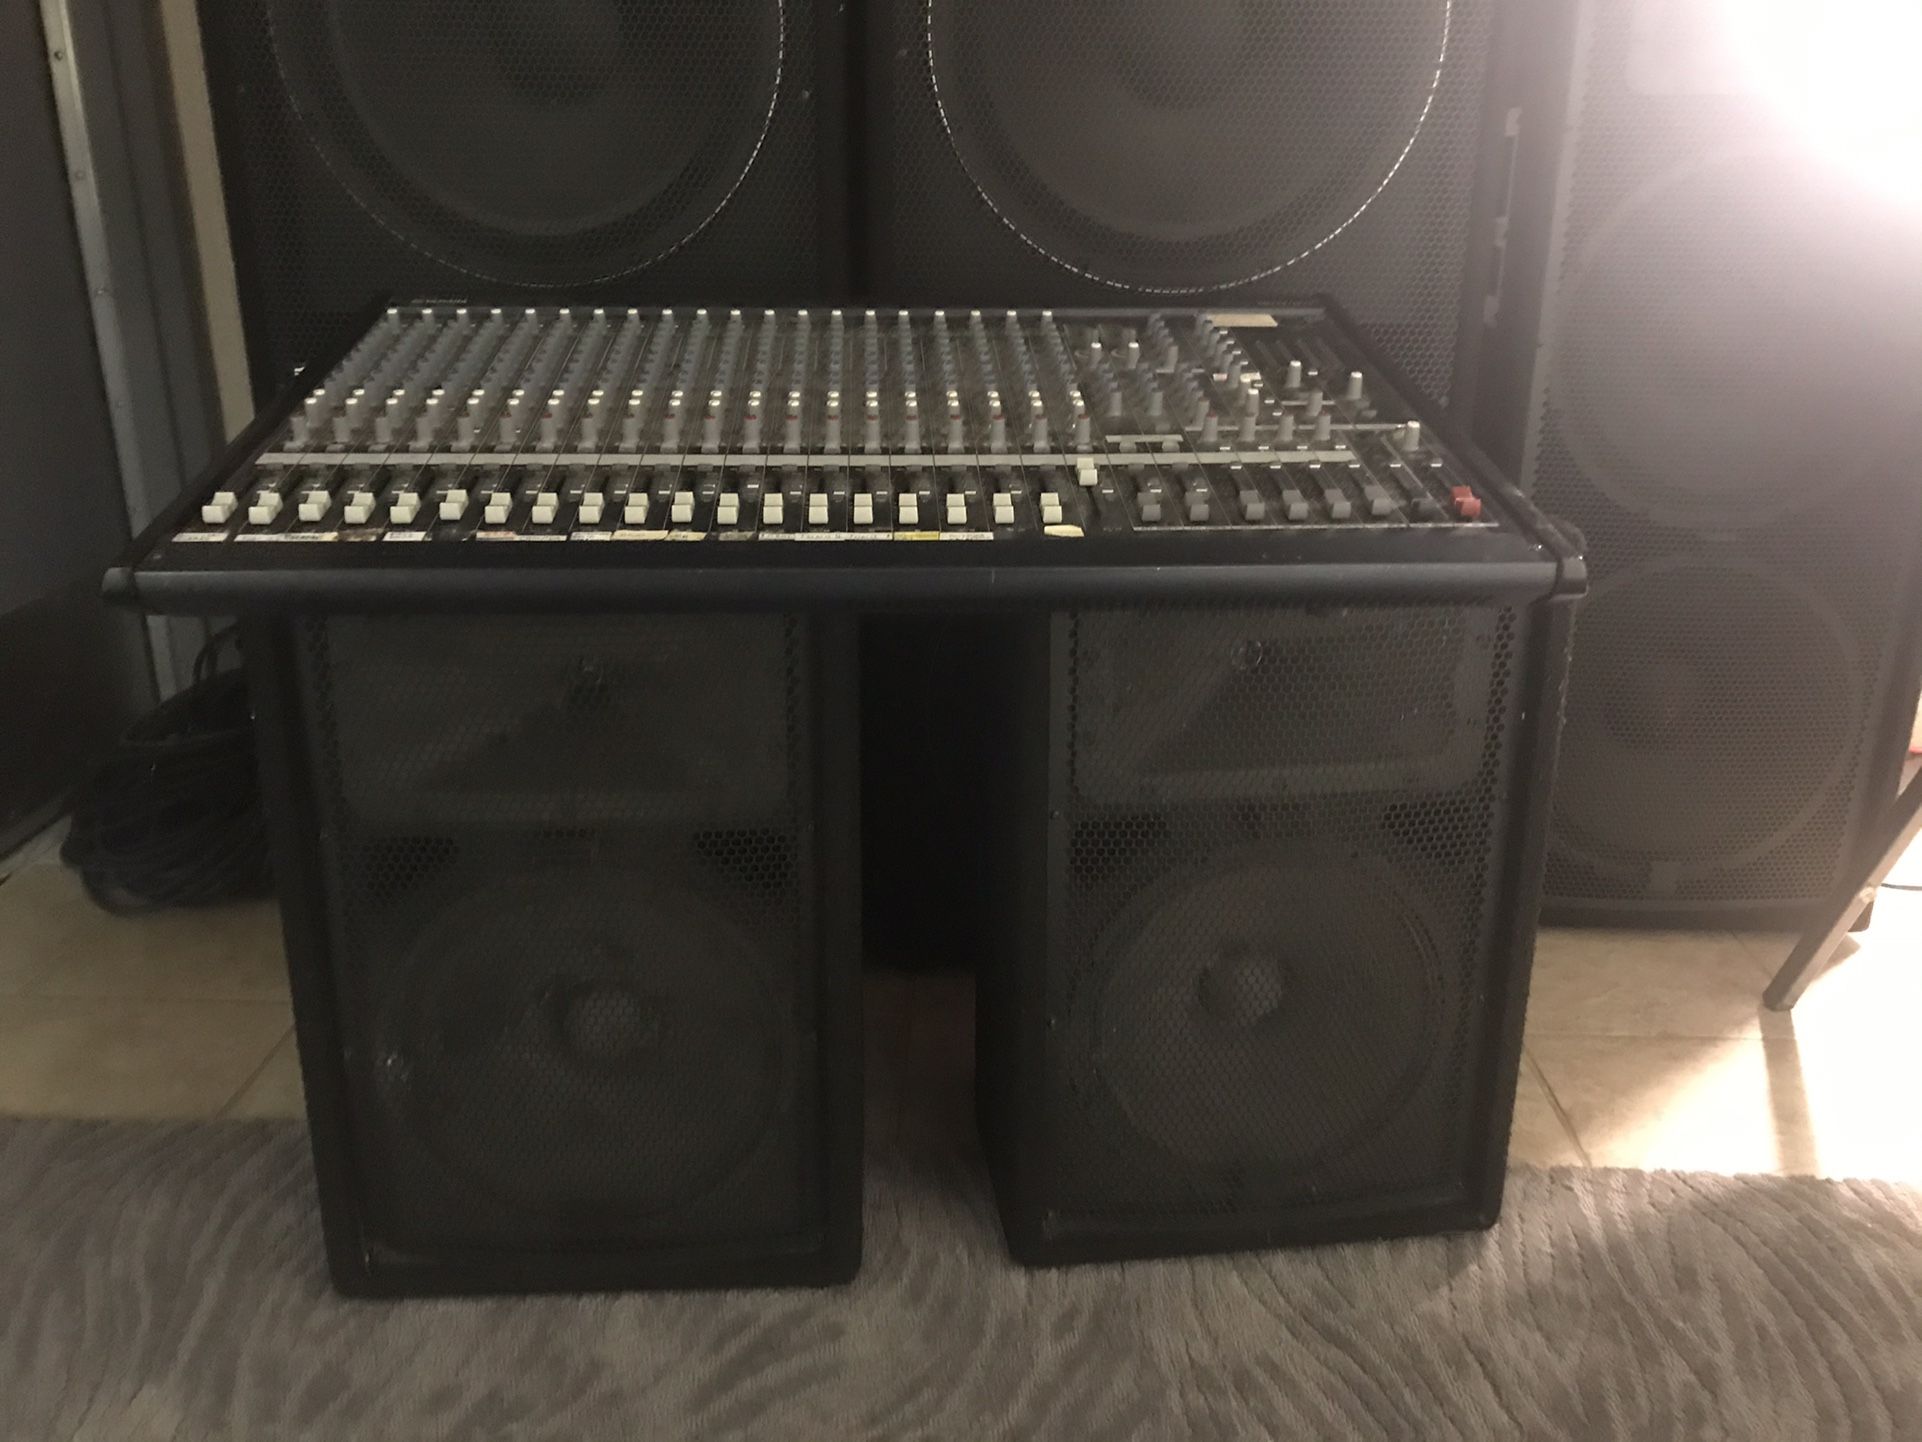 speaker set mixer amplifiers and monitors